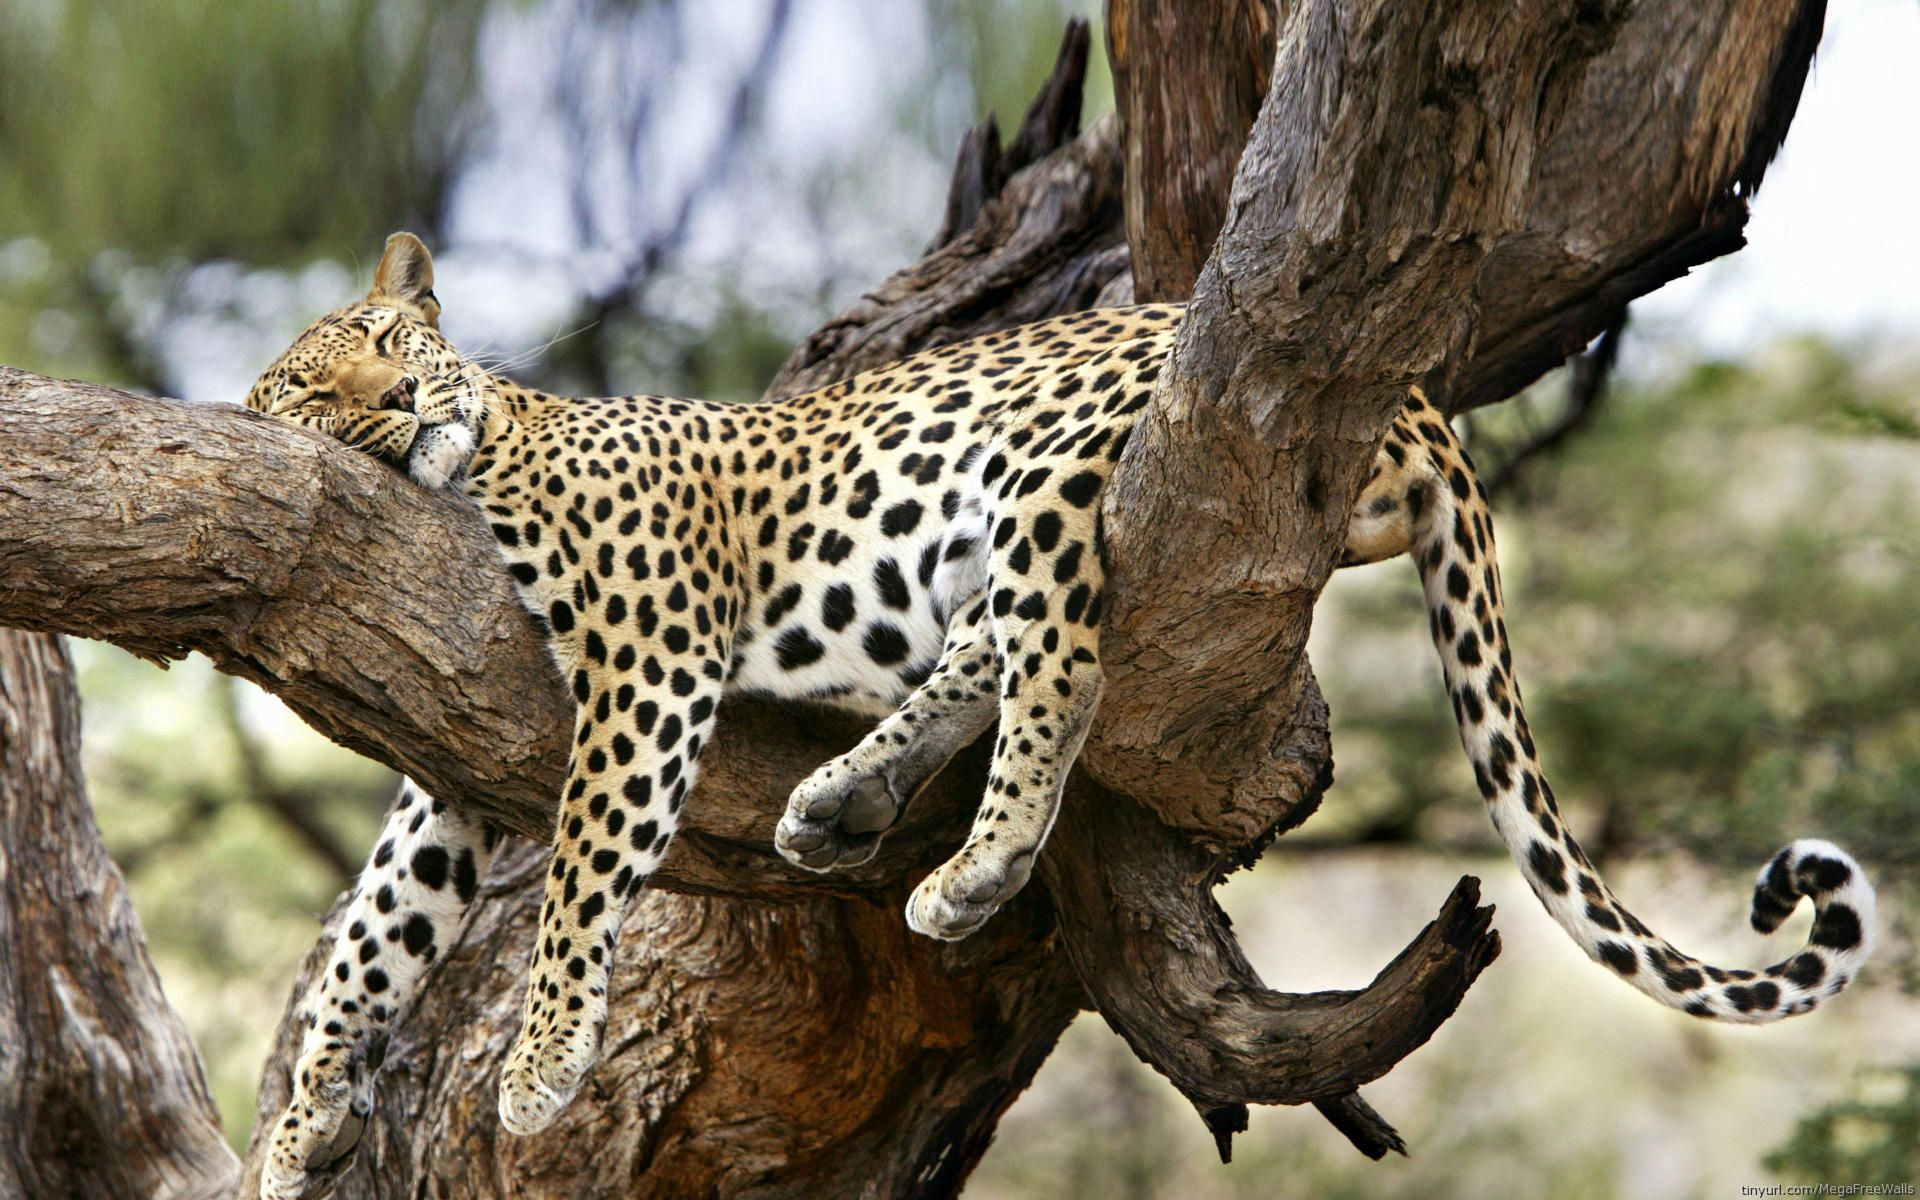 Big Cat Sleeping in Tree